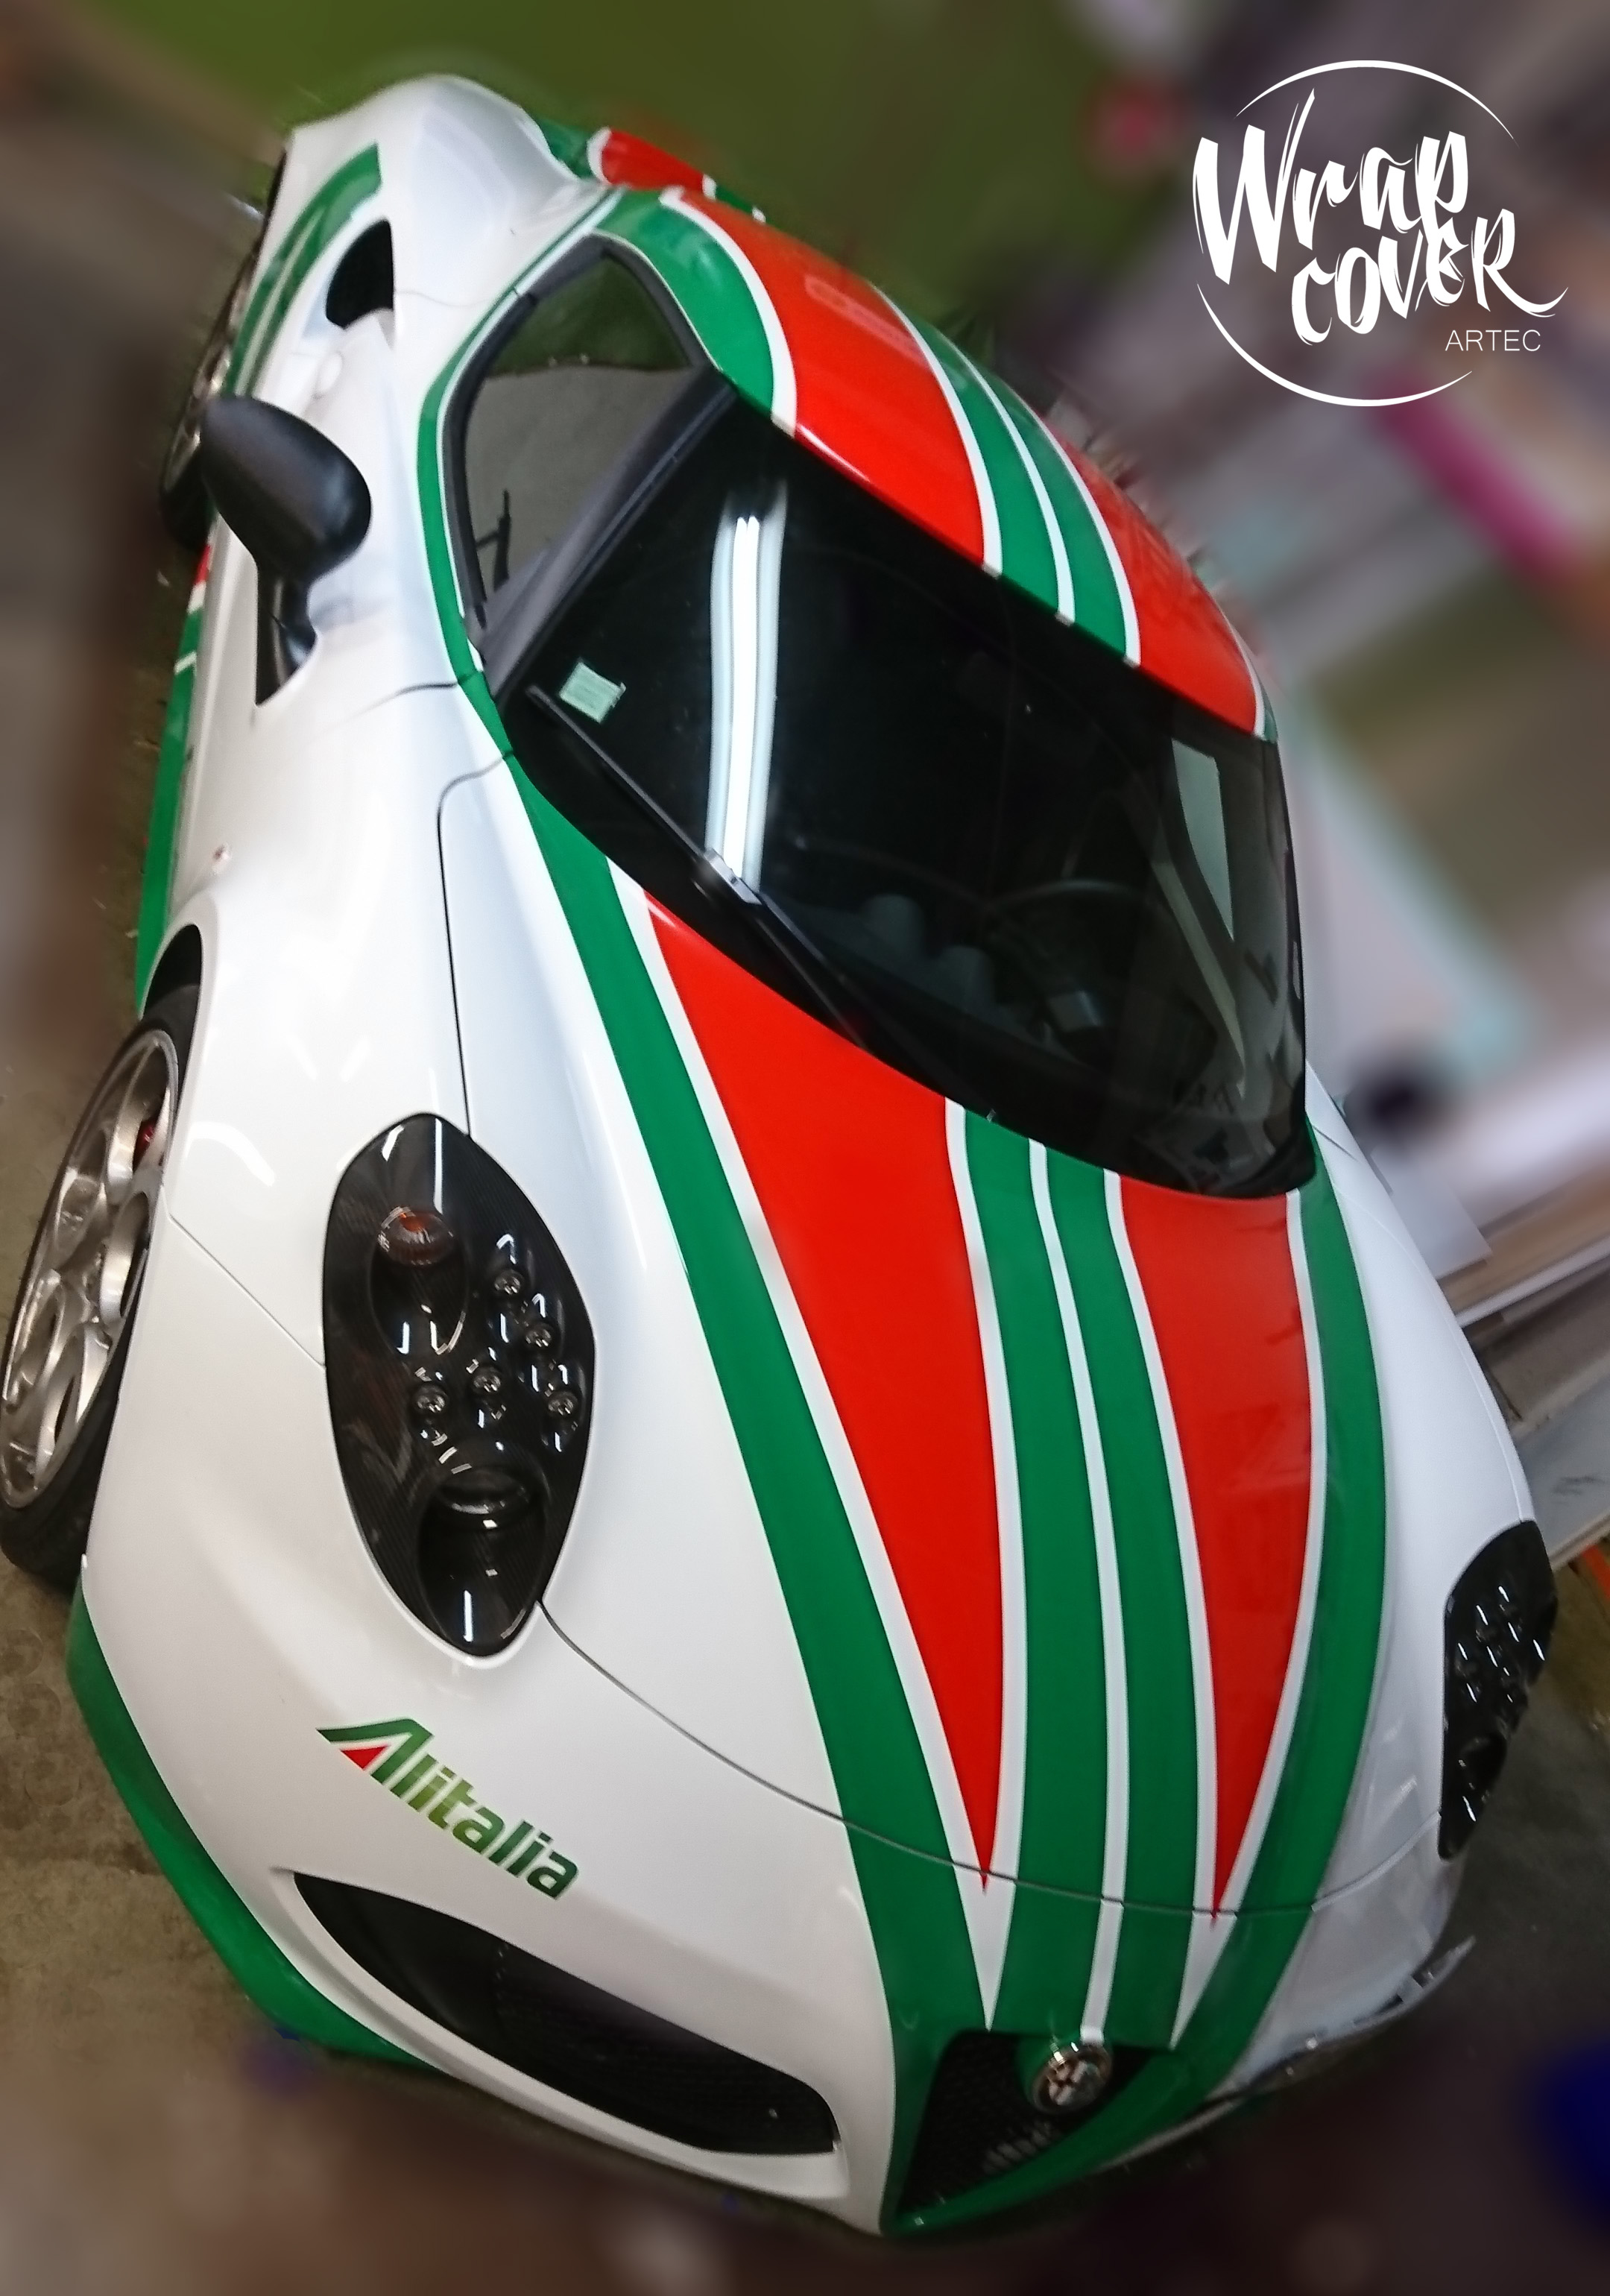 Lire la suite à propos de l’article Alfa Roméo Alitalia Pirelli